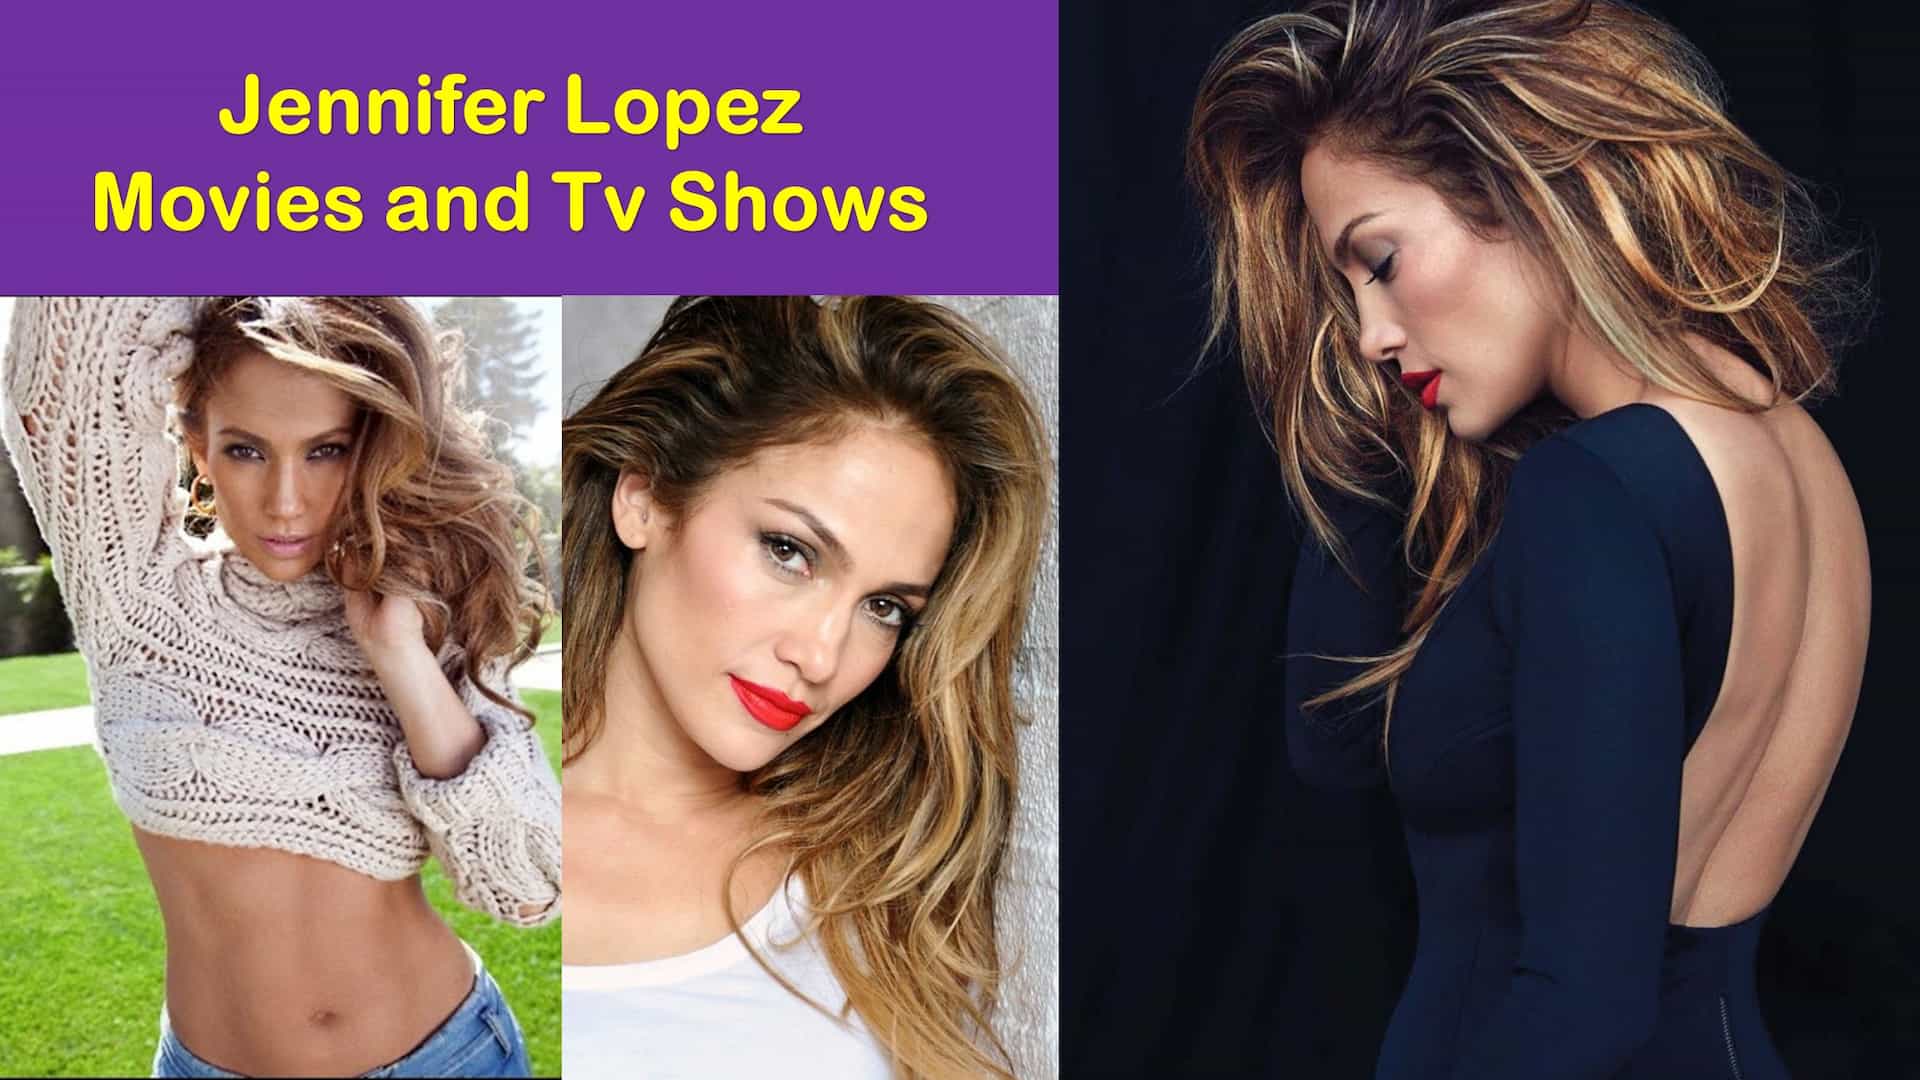 Lopez Lists Jennifer List of